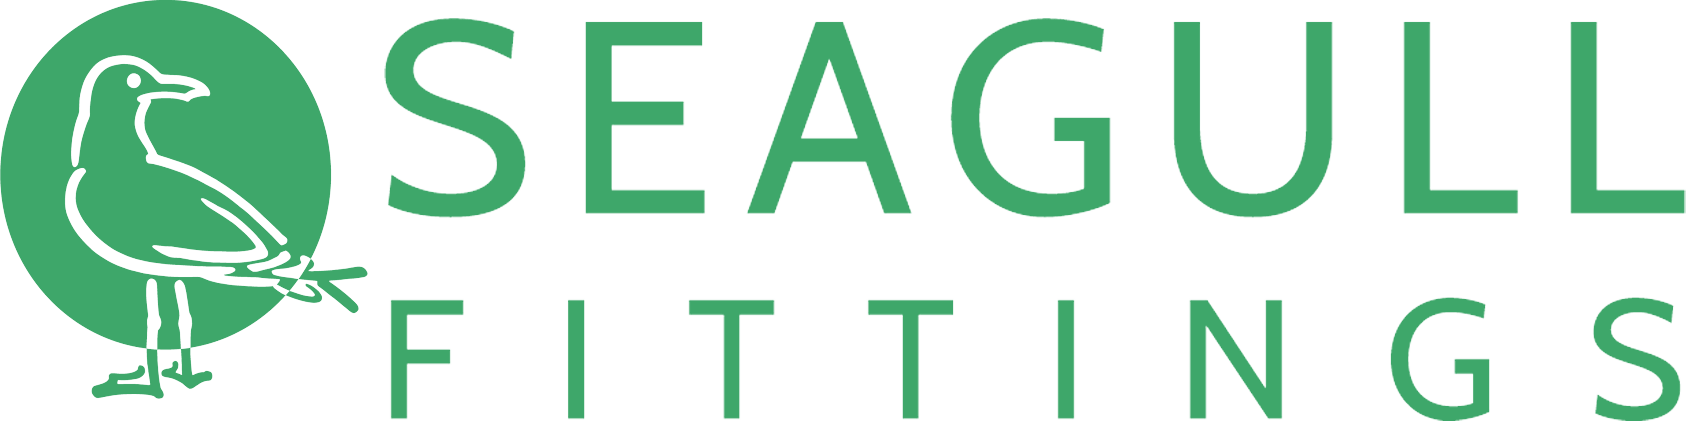 Seagull Fittings - Logo